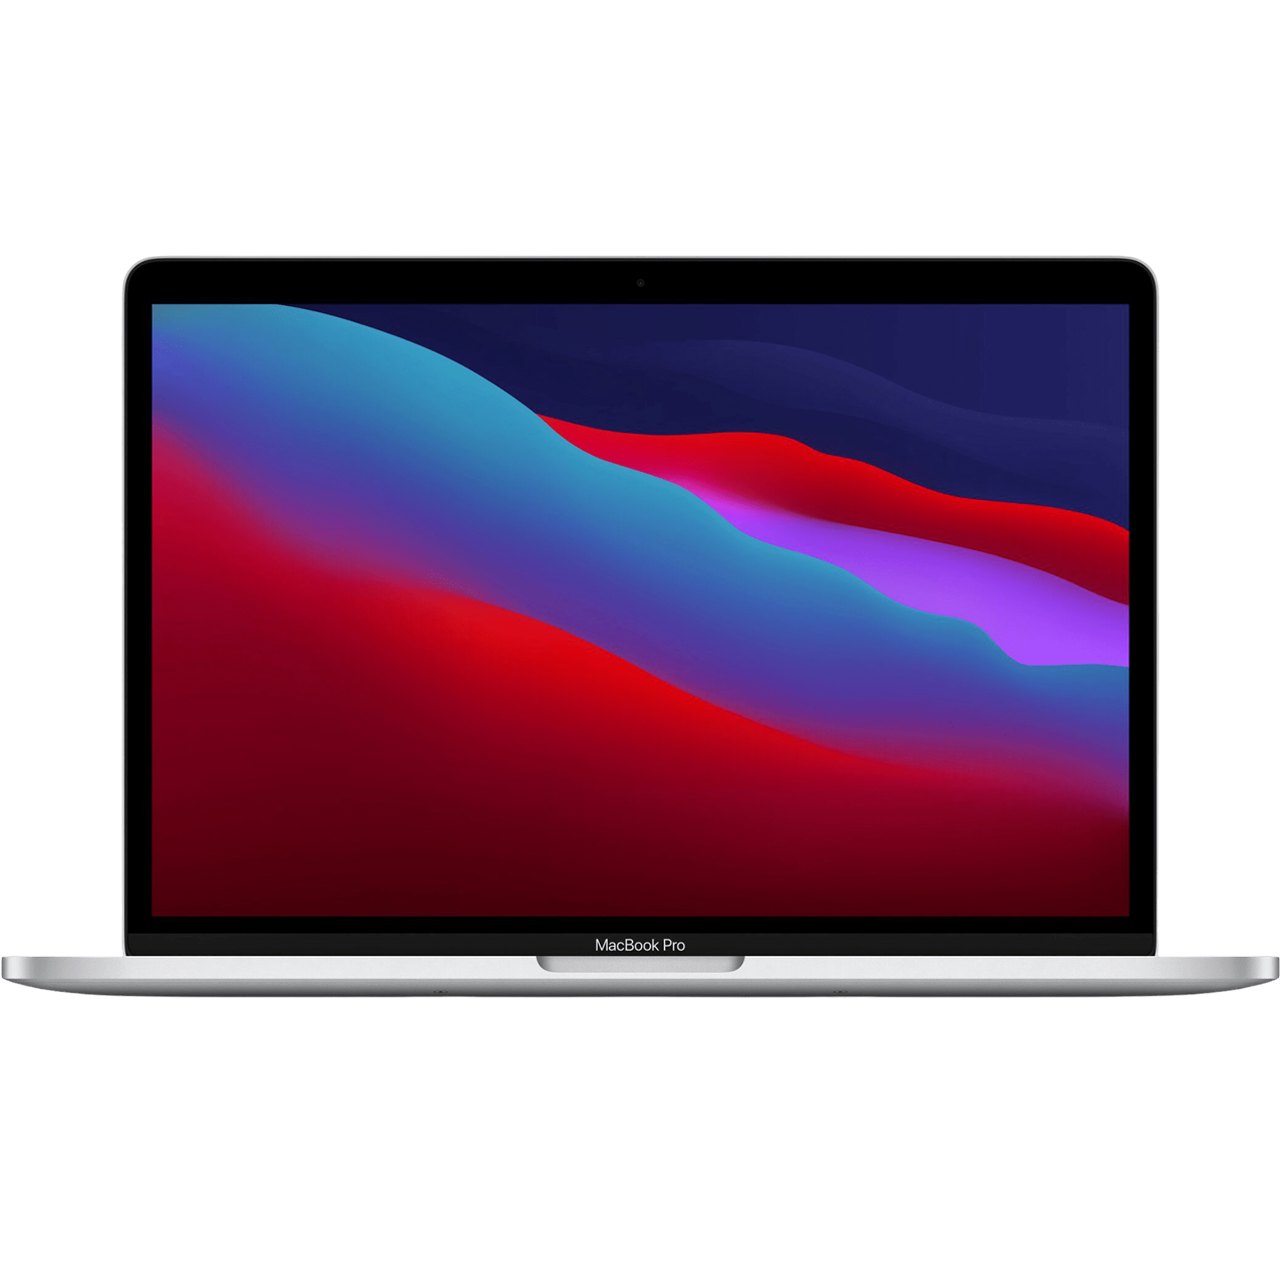 macbook pro 13 inches